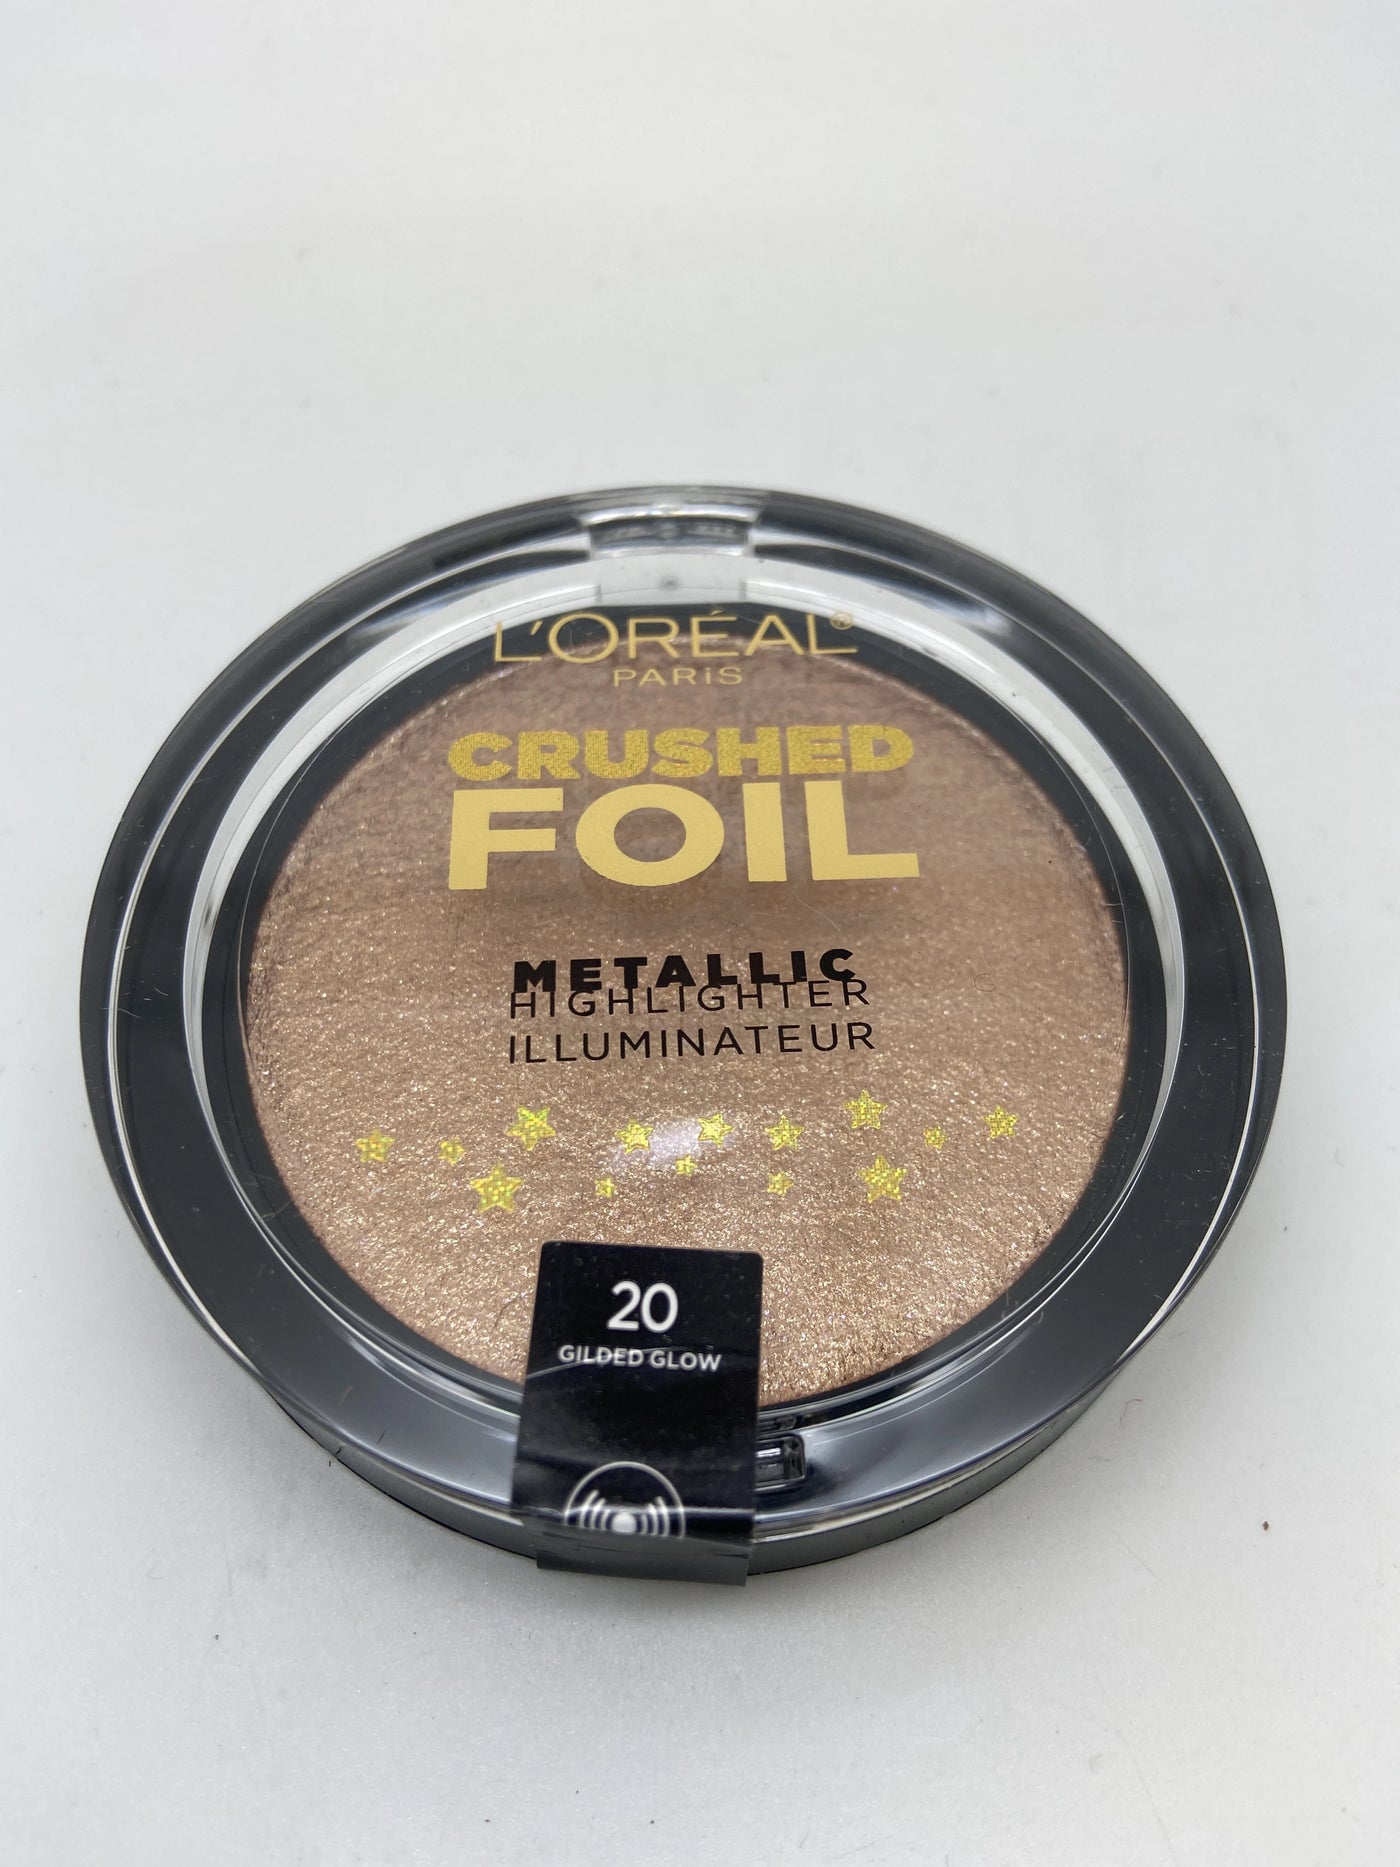 L'oreal Crushed Foil Metallic Highlighter Illuminator, 20 Gilded Glow